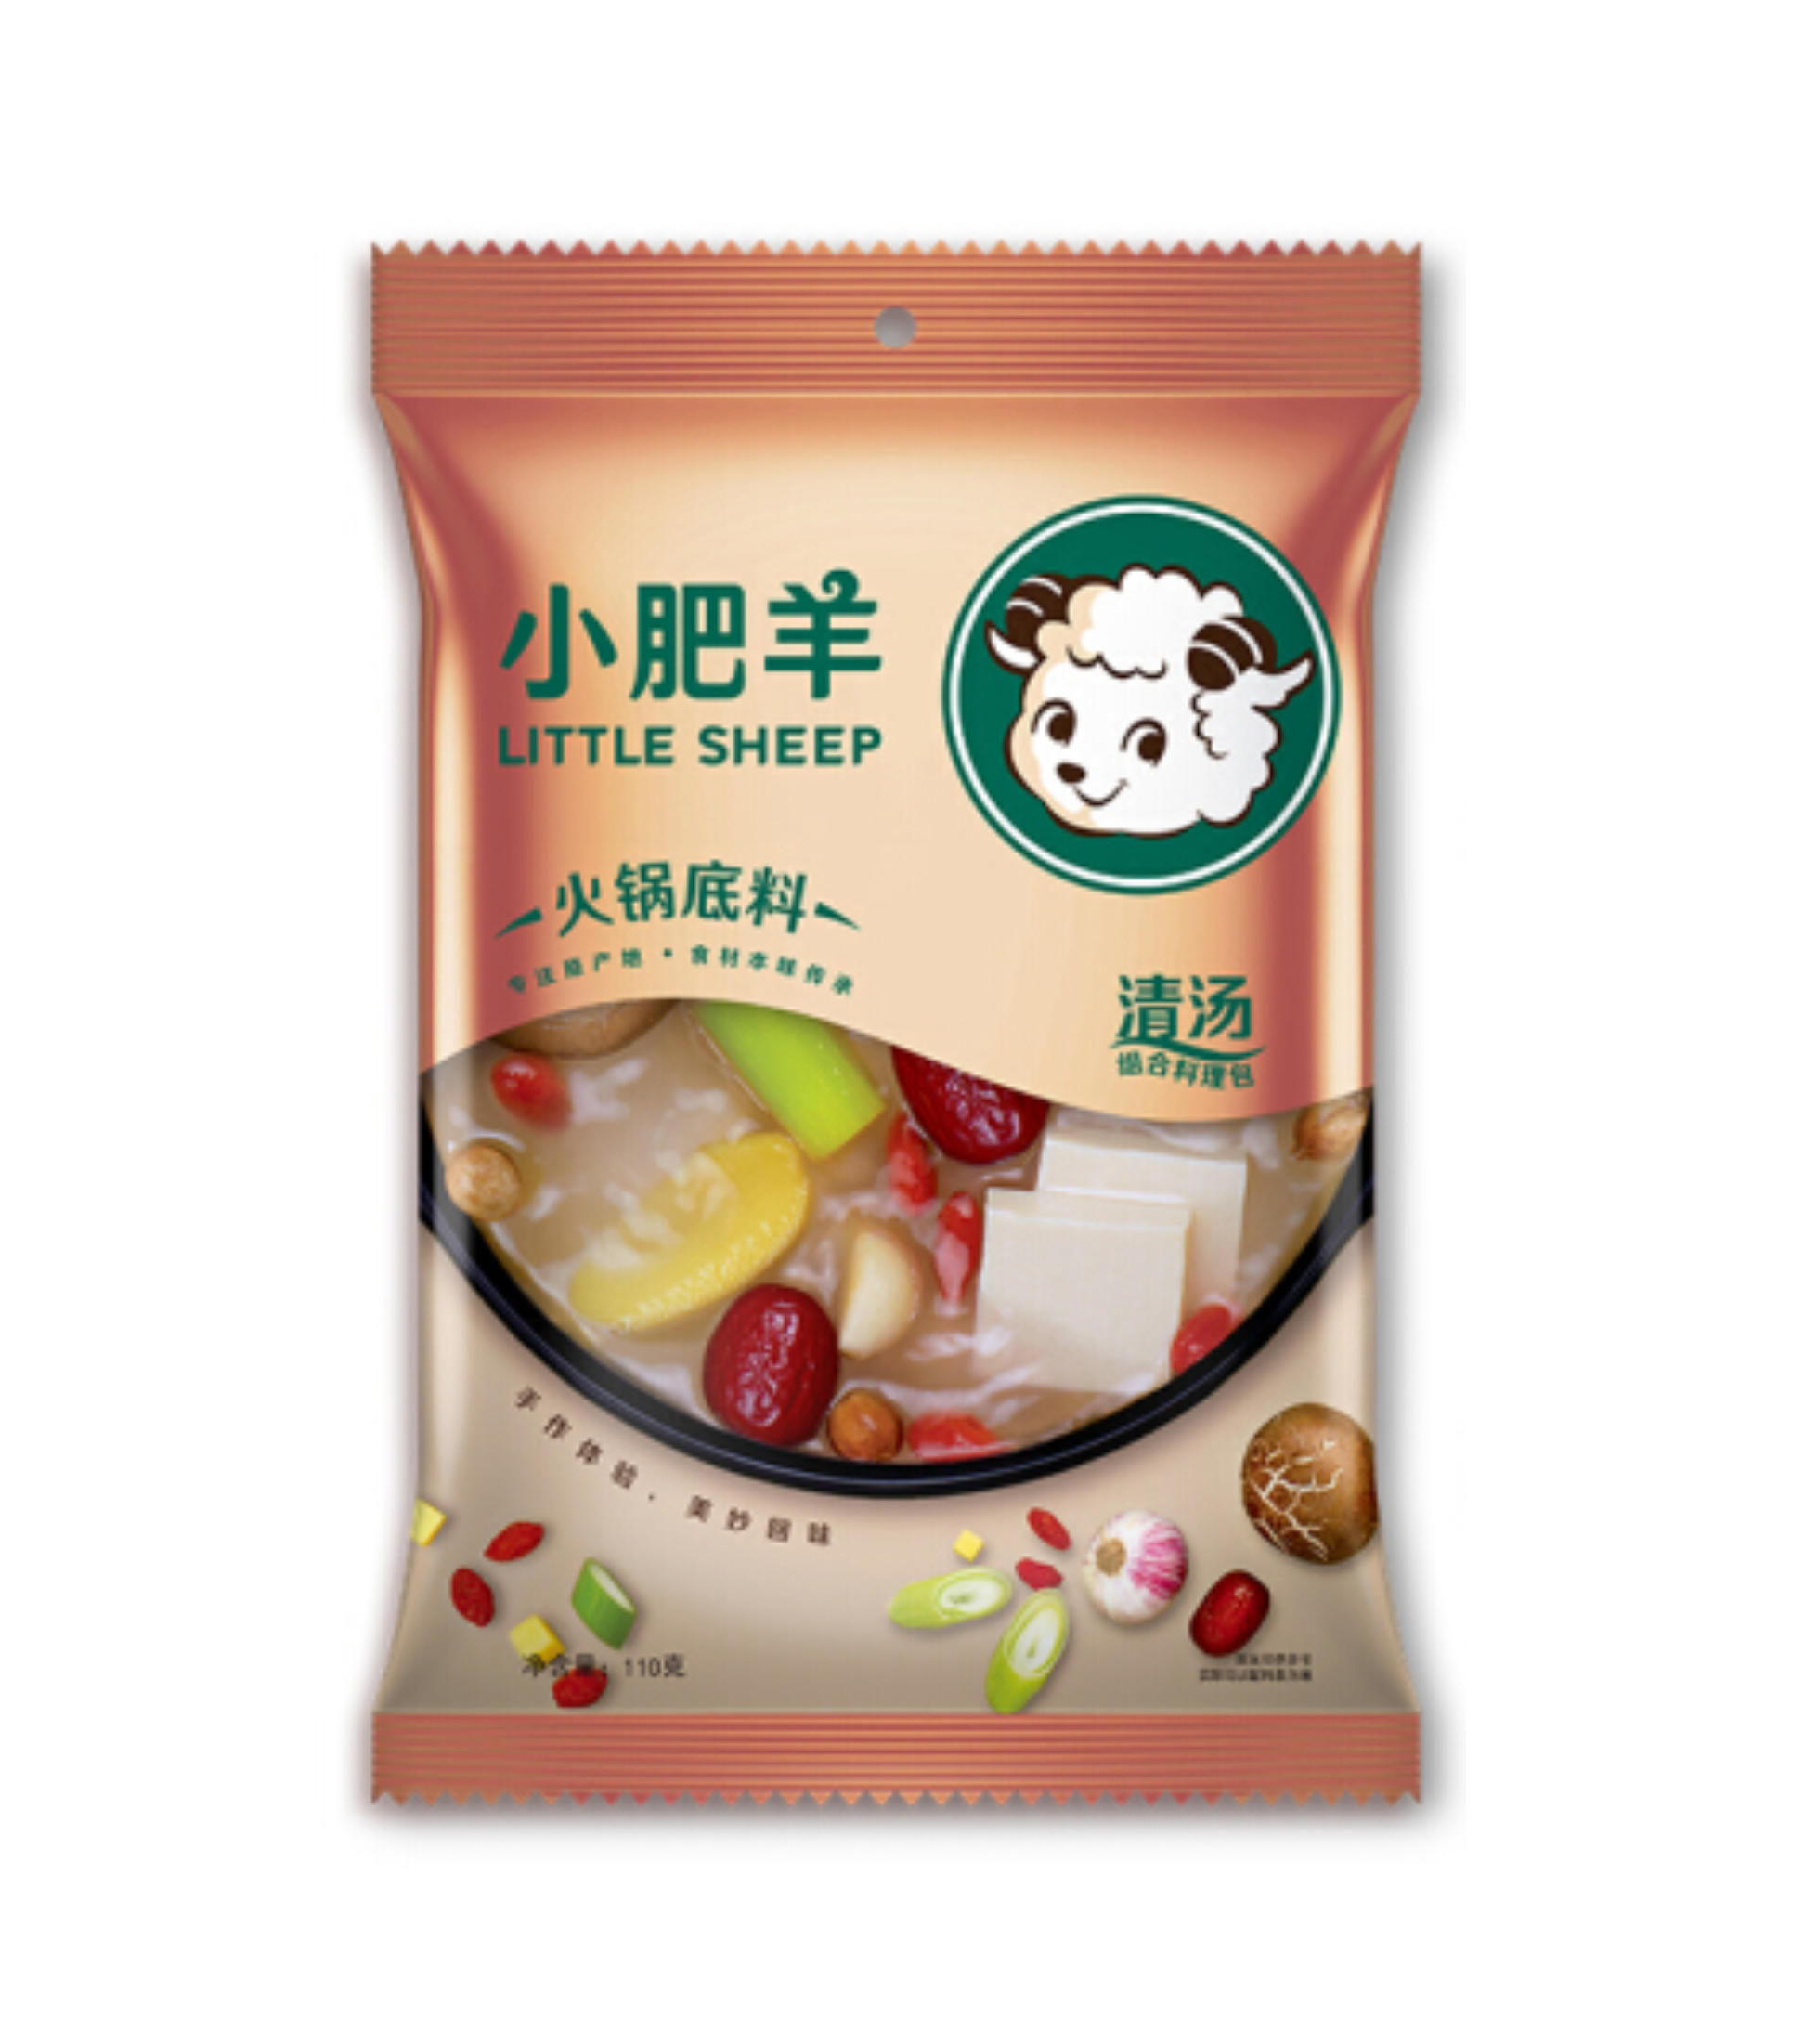 Little Sheep Hot pot soep basis heet (小肥羊 火锅底料 辣汤)